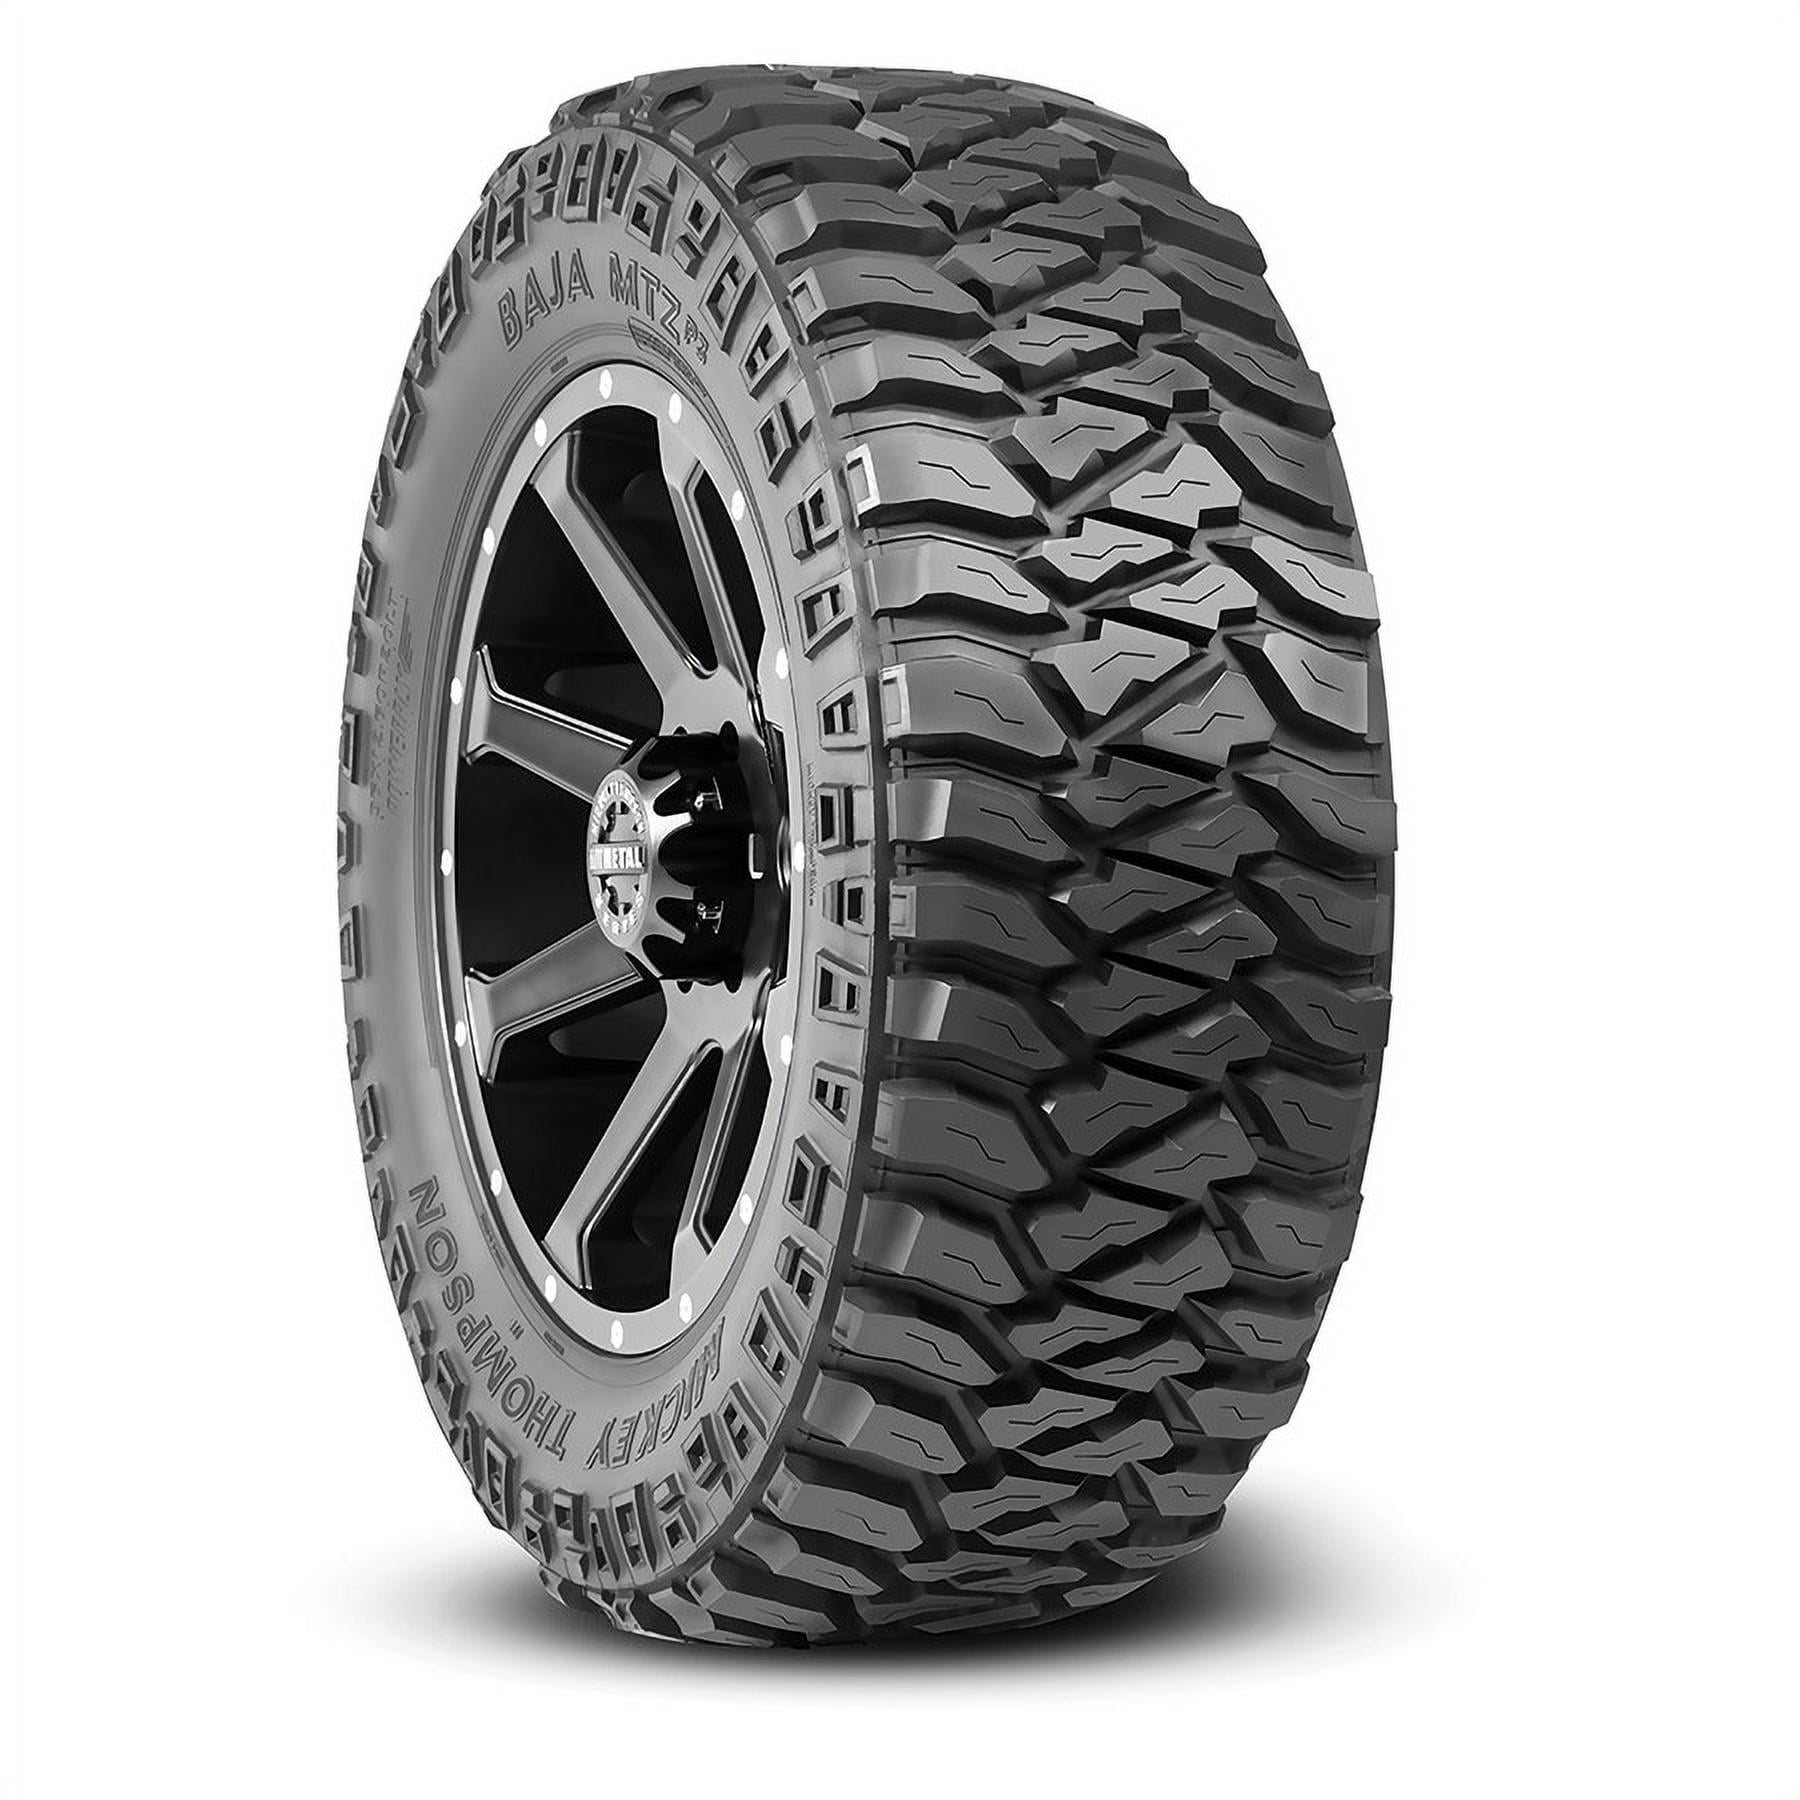 LT285/75R16 126Q Mickey Thompson Baja MTZP3 Mud Terrain Radial Tire 